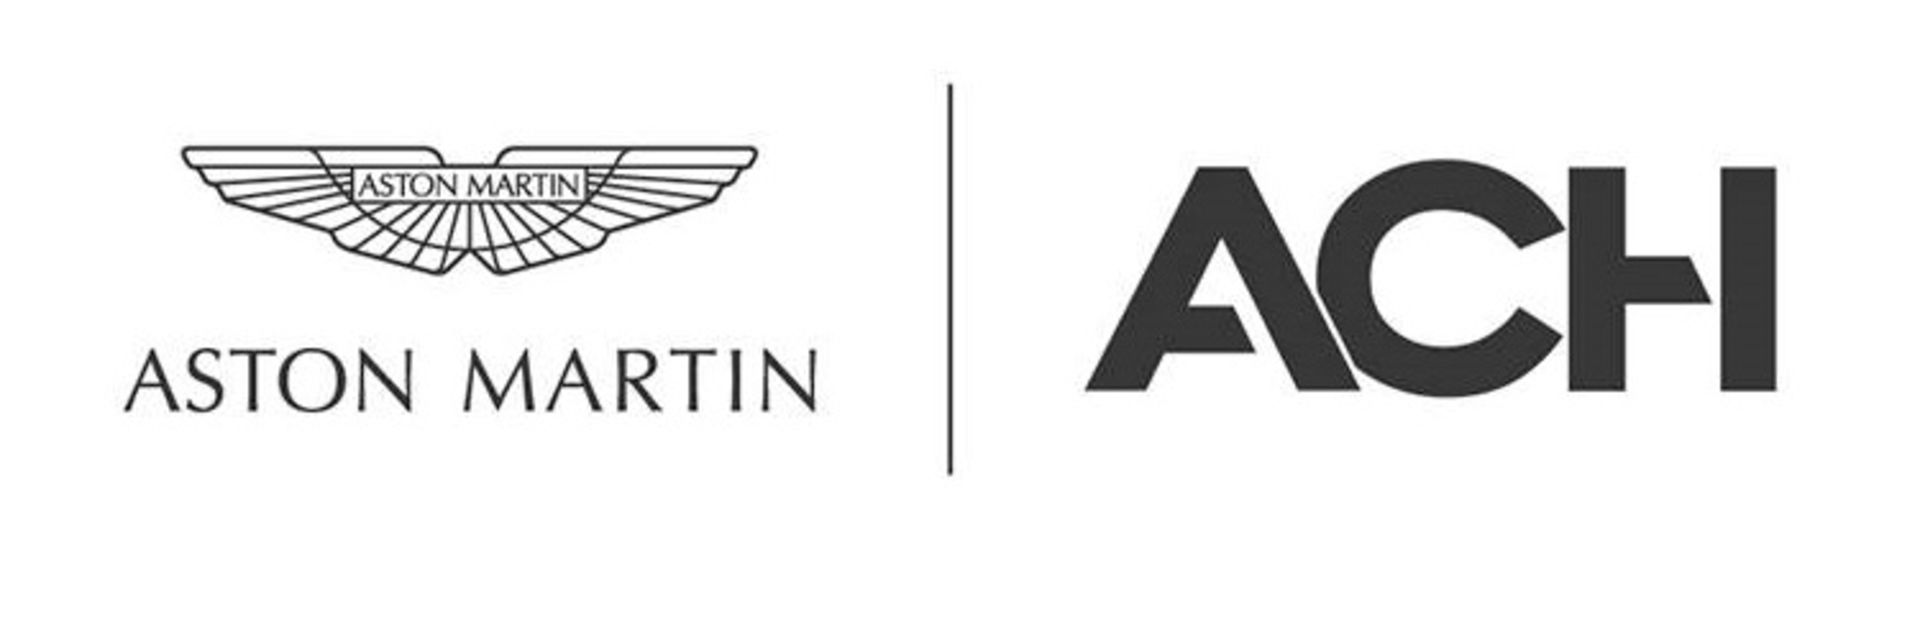 airbus aston martin/ ایرباس استون مارتین